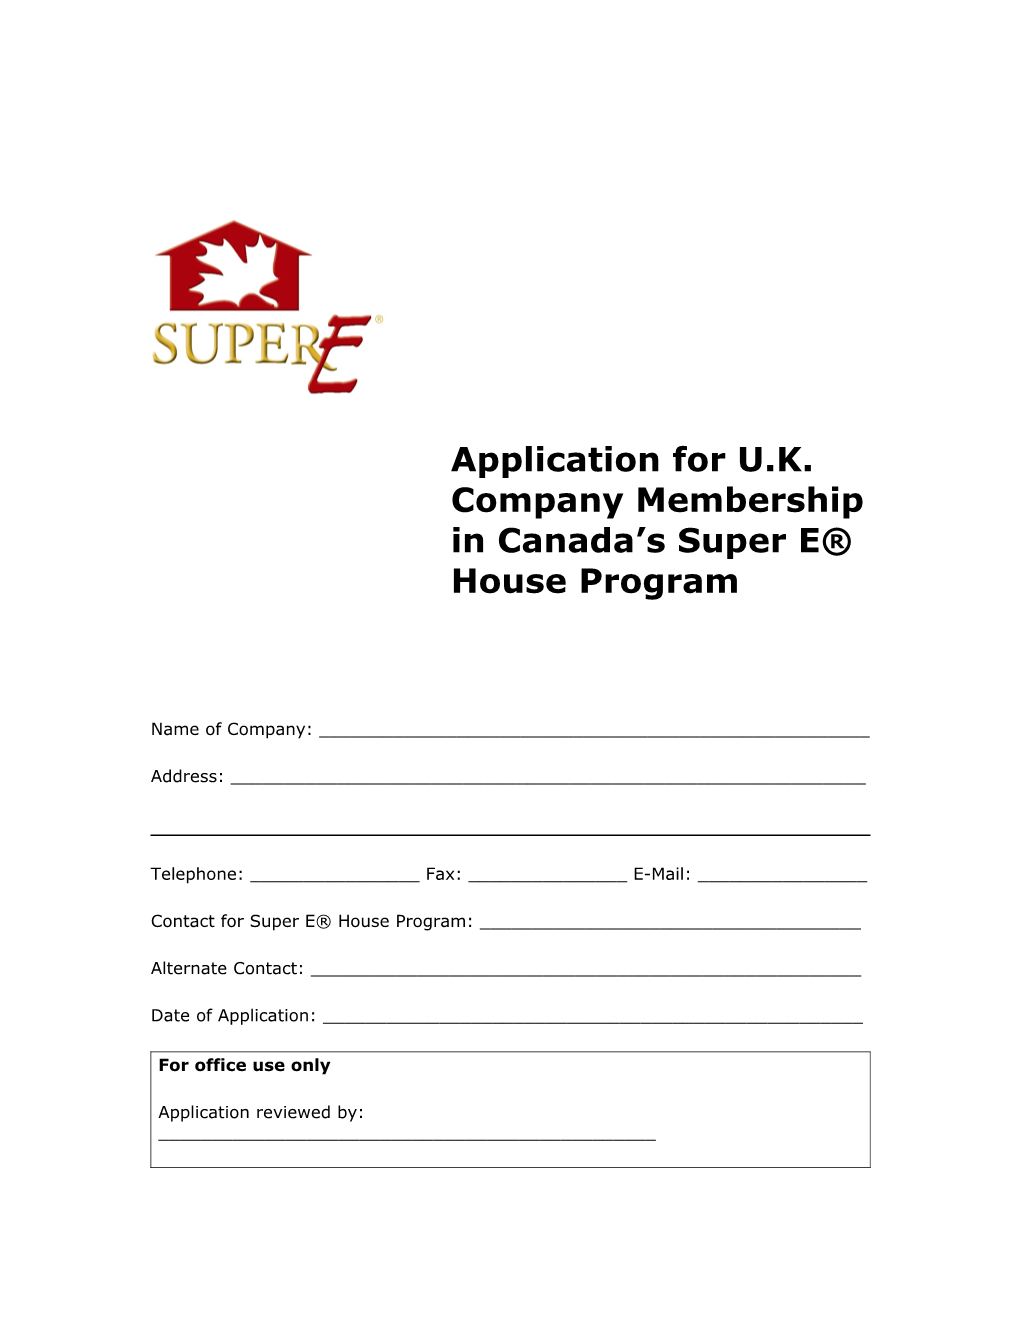 Application for Irish Company Membership in Canada S Super E House Program